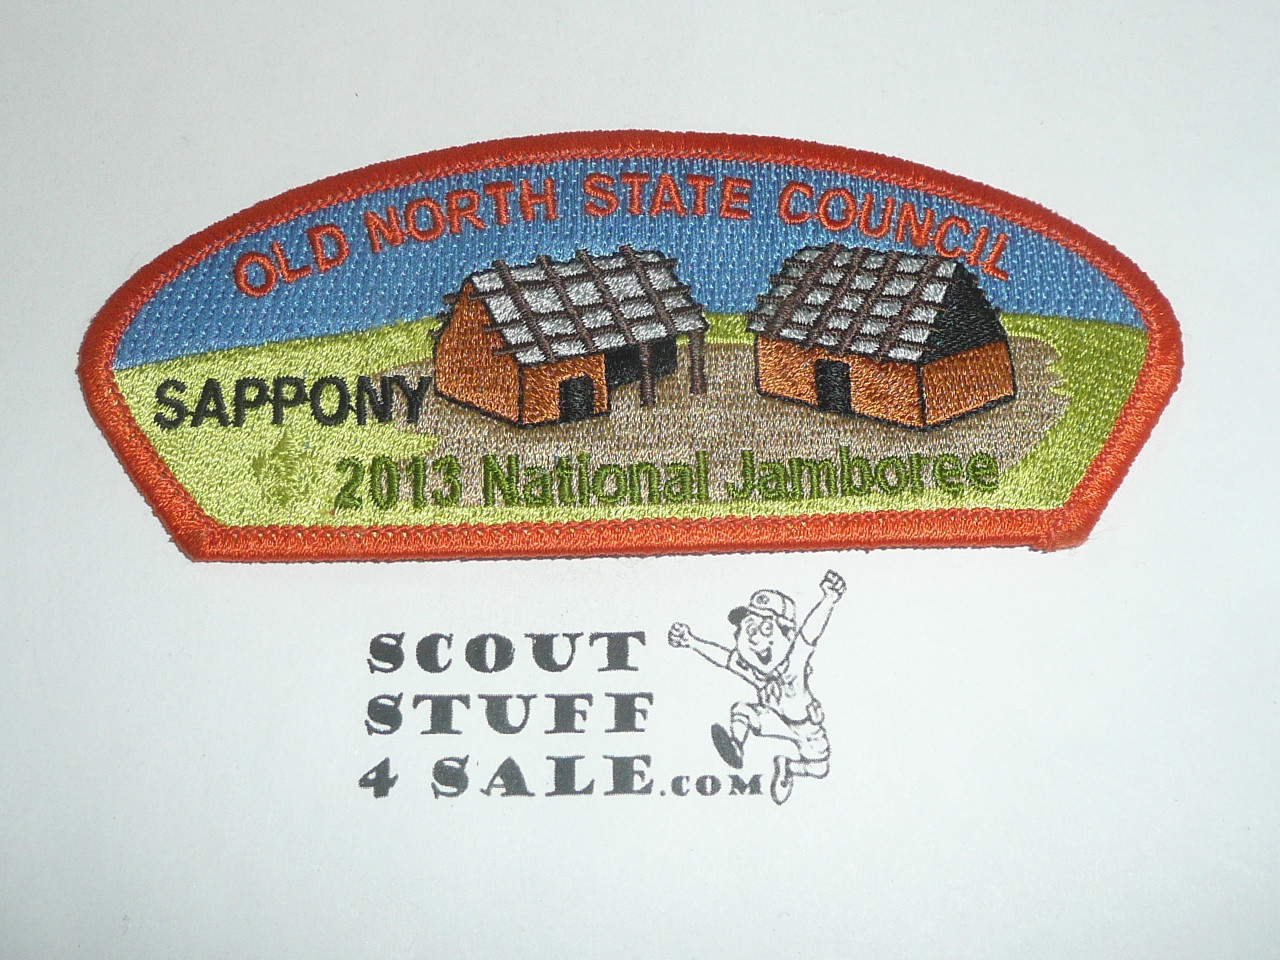 2013 National Jamboree JSP - Old North State Council